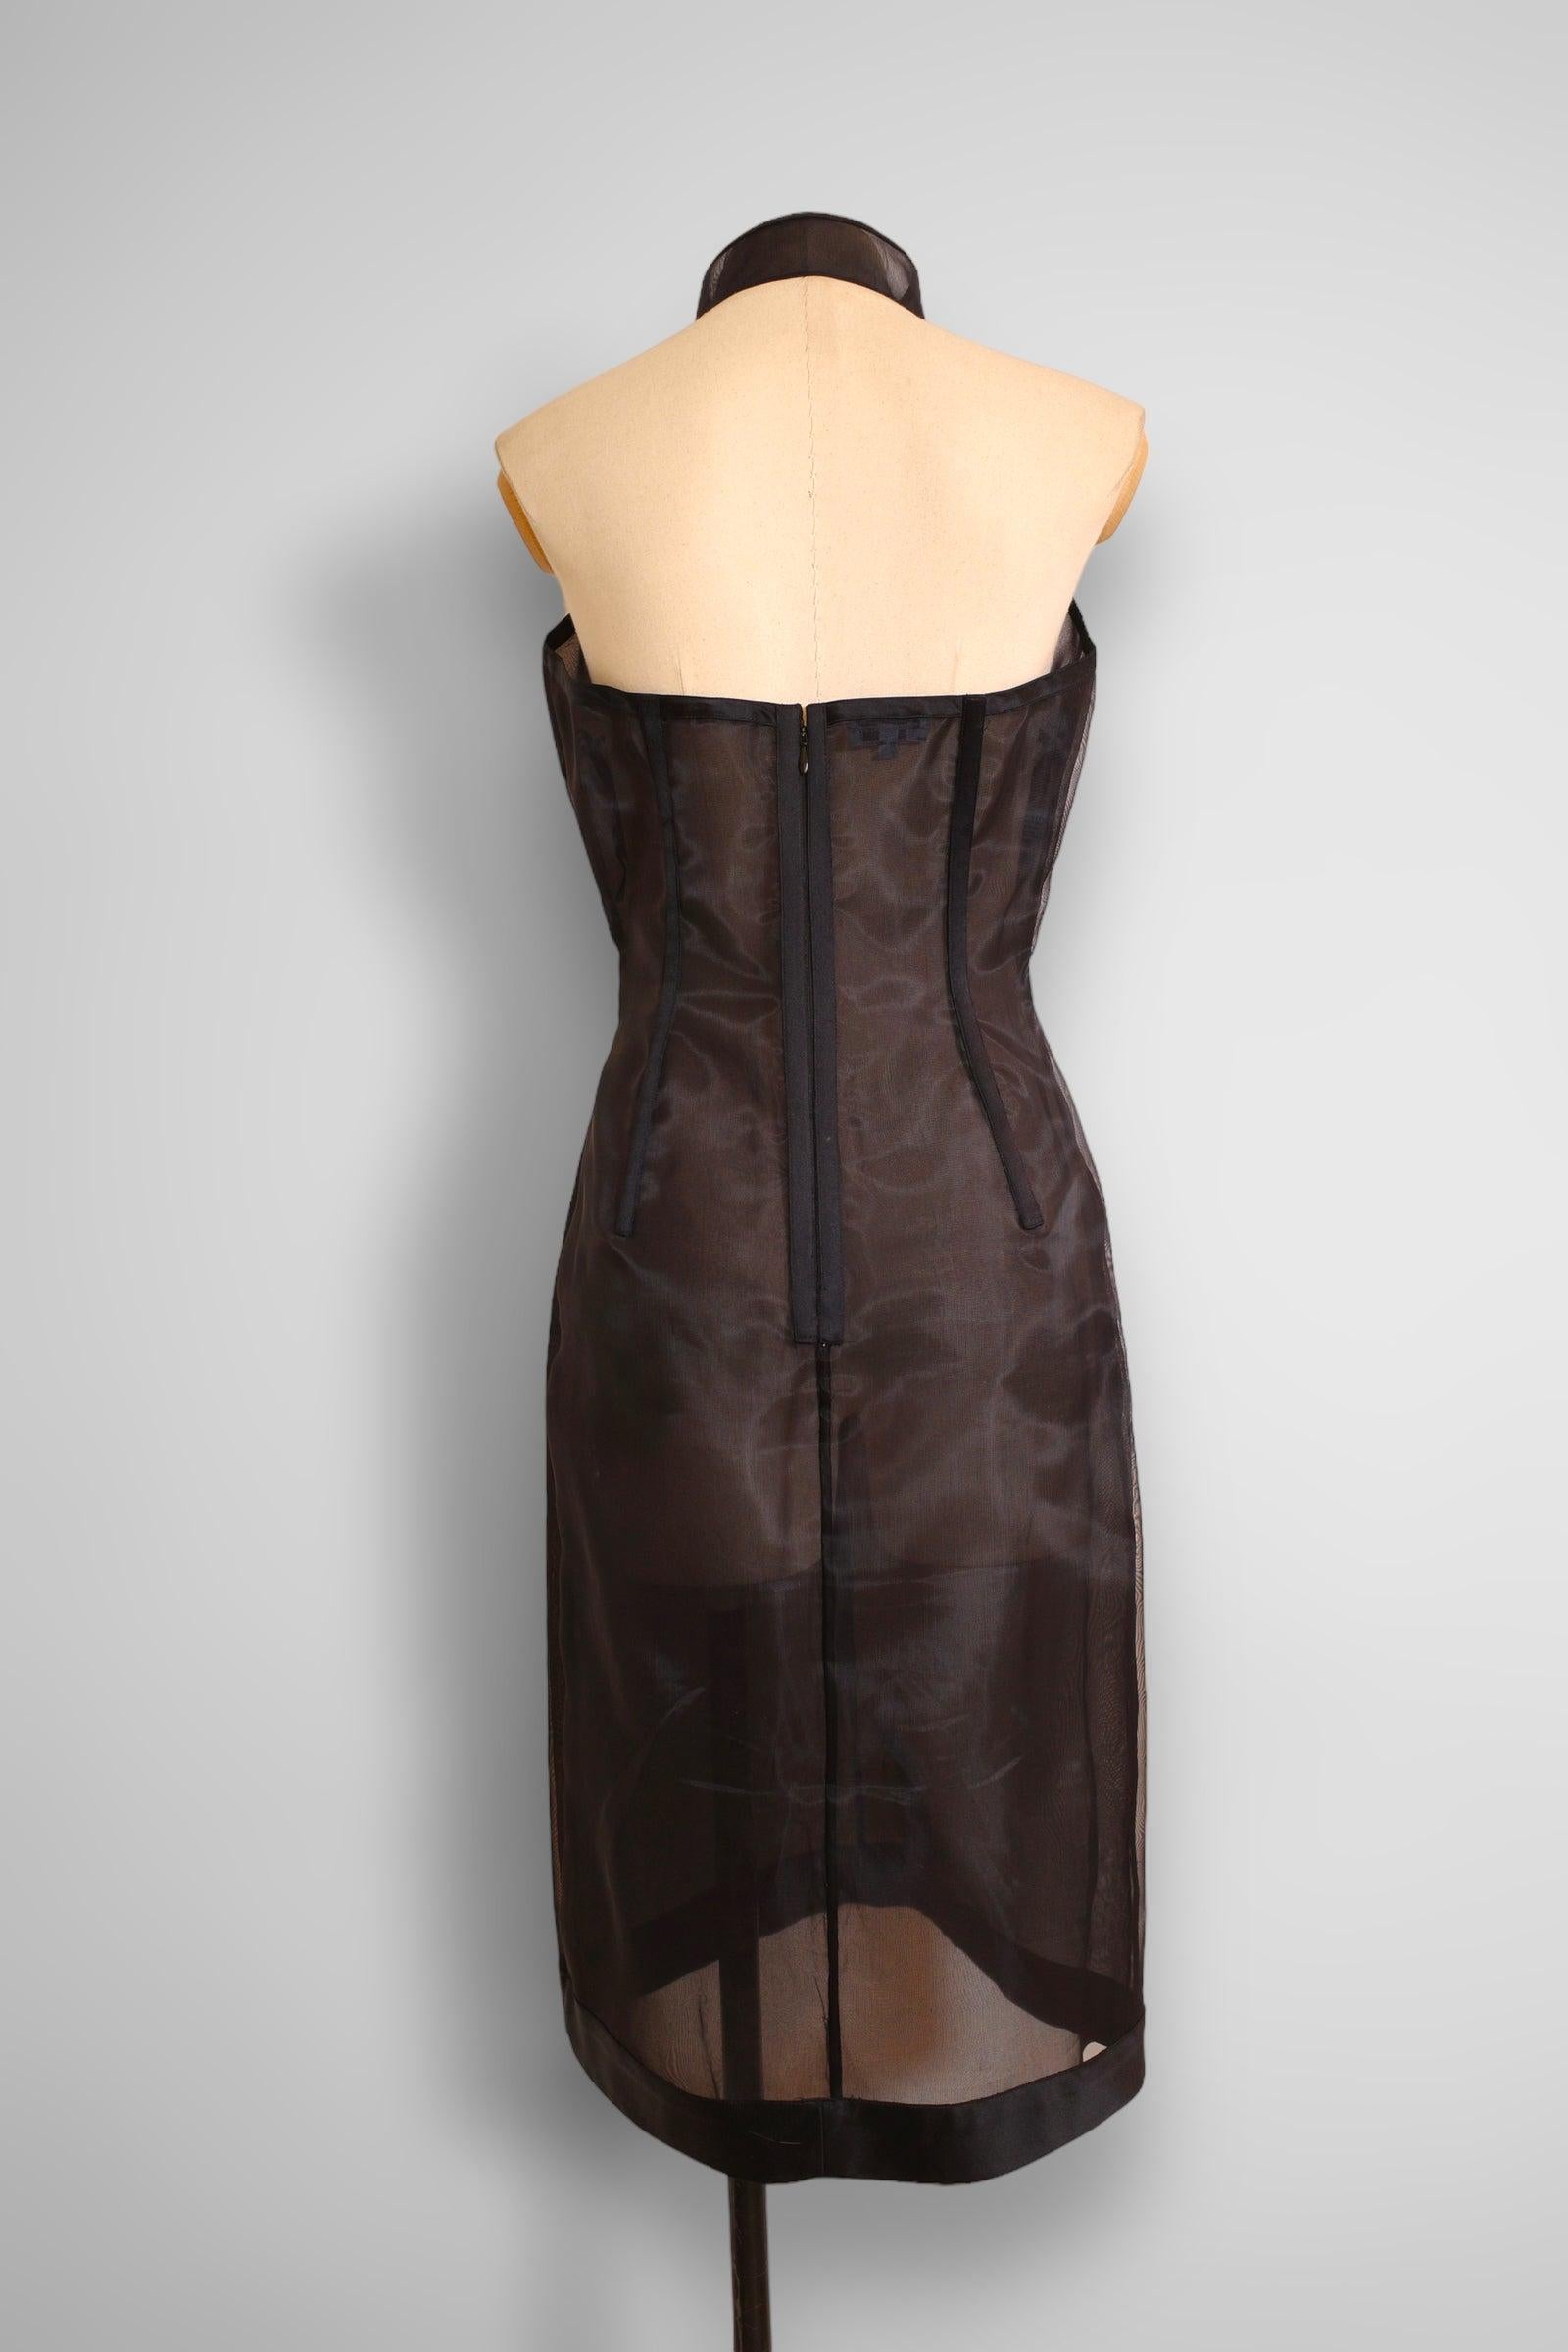 Prada 1995ss final look boned dress In Good Condition For Sale In CAPELLE AAN DEN IJSSEL, ZH